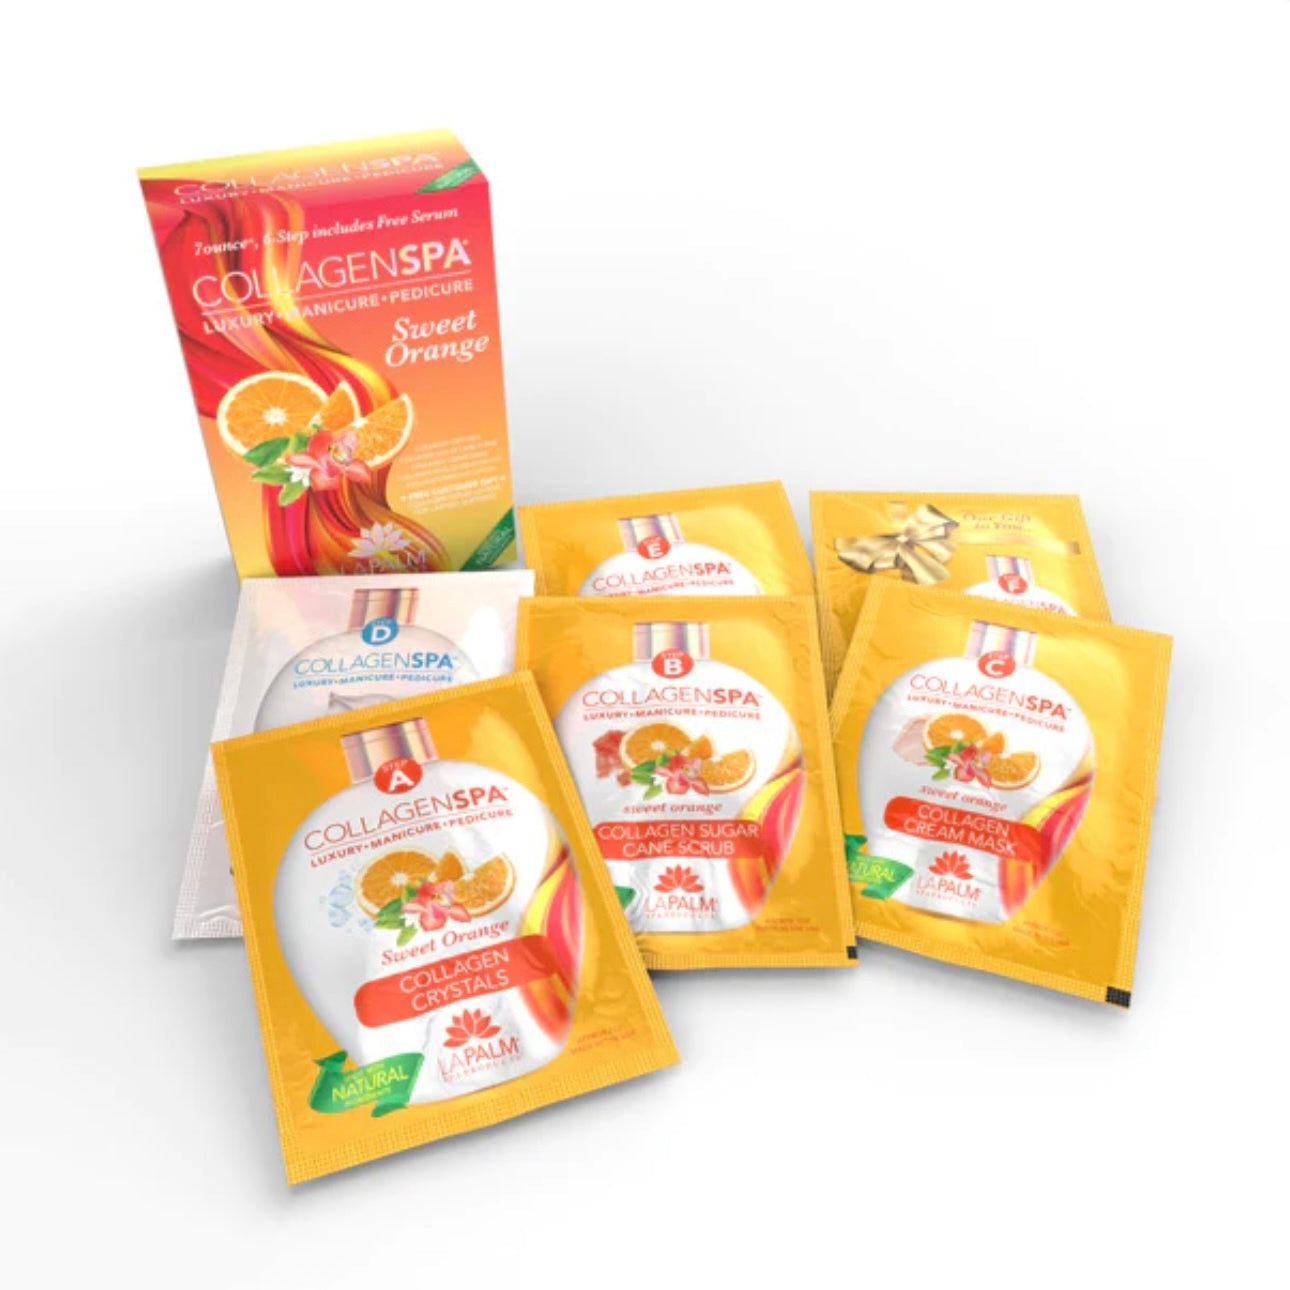 LaPalm Collagen Spa 6 Step Kit - Sweet Orange